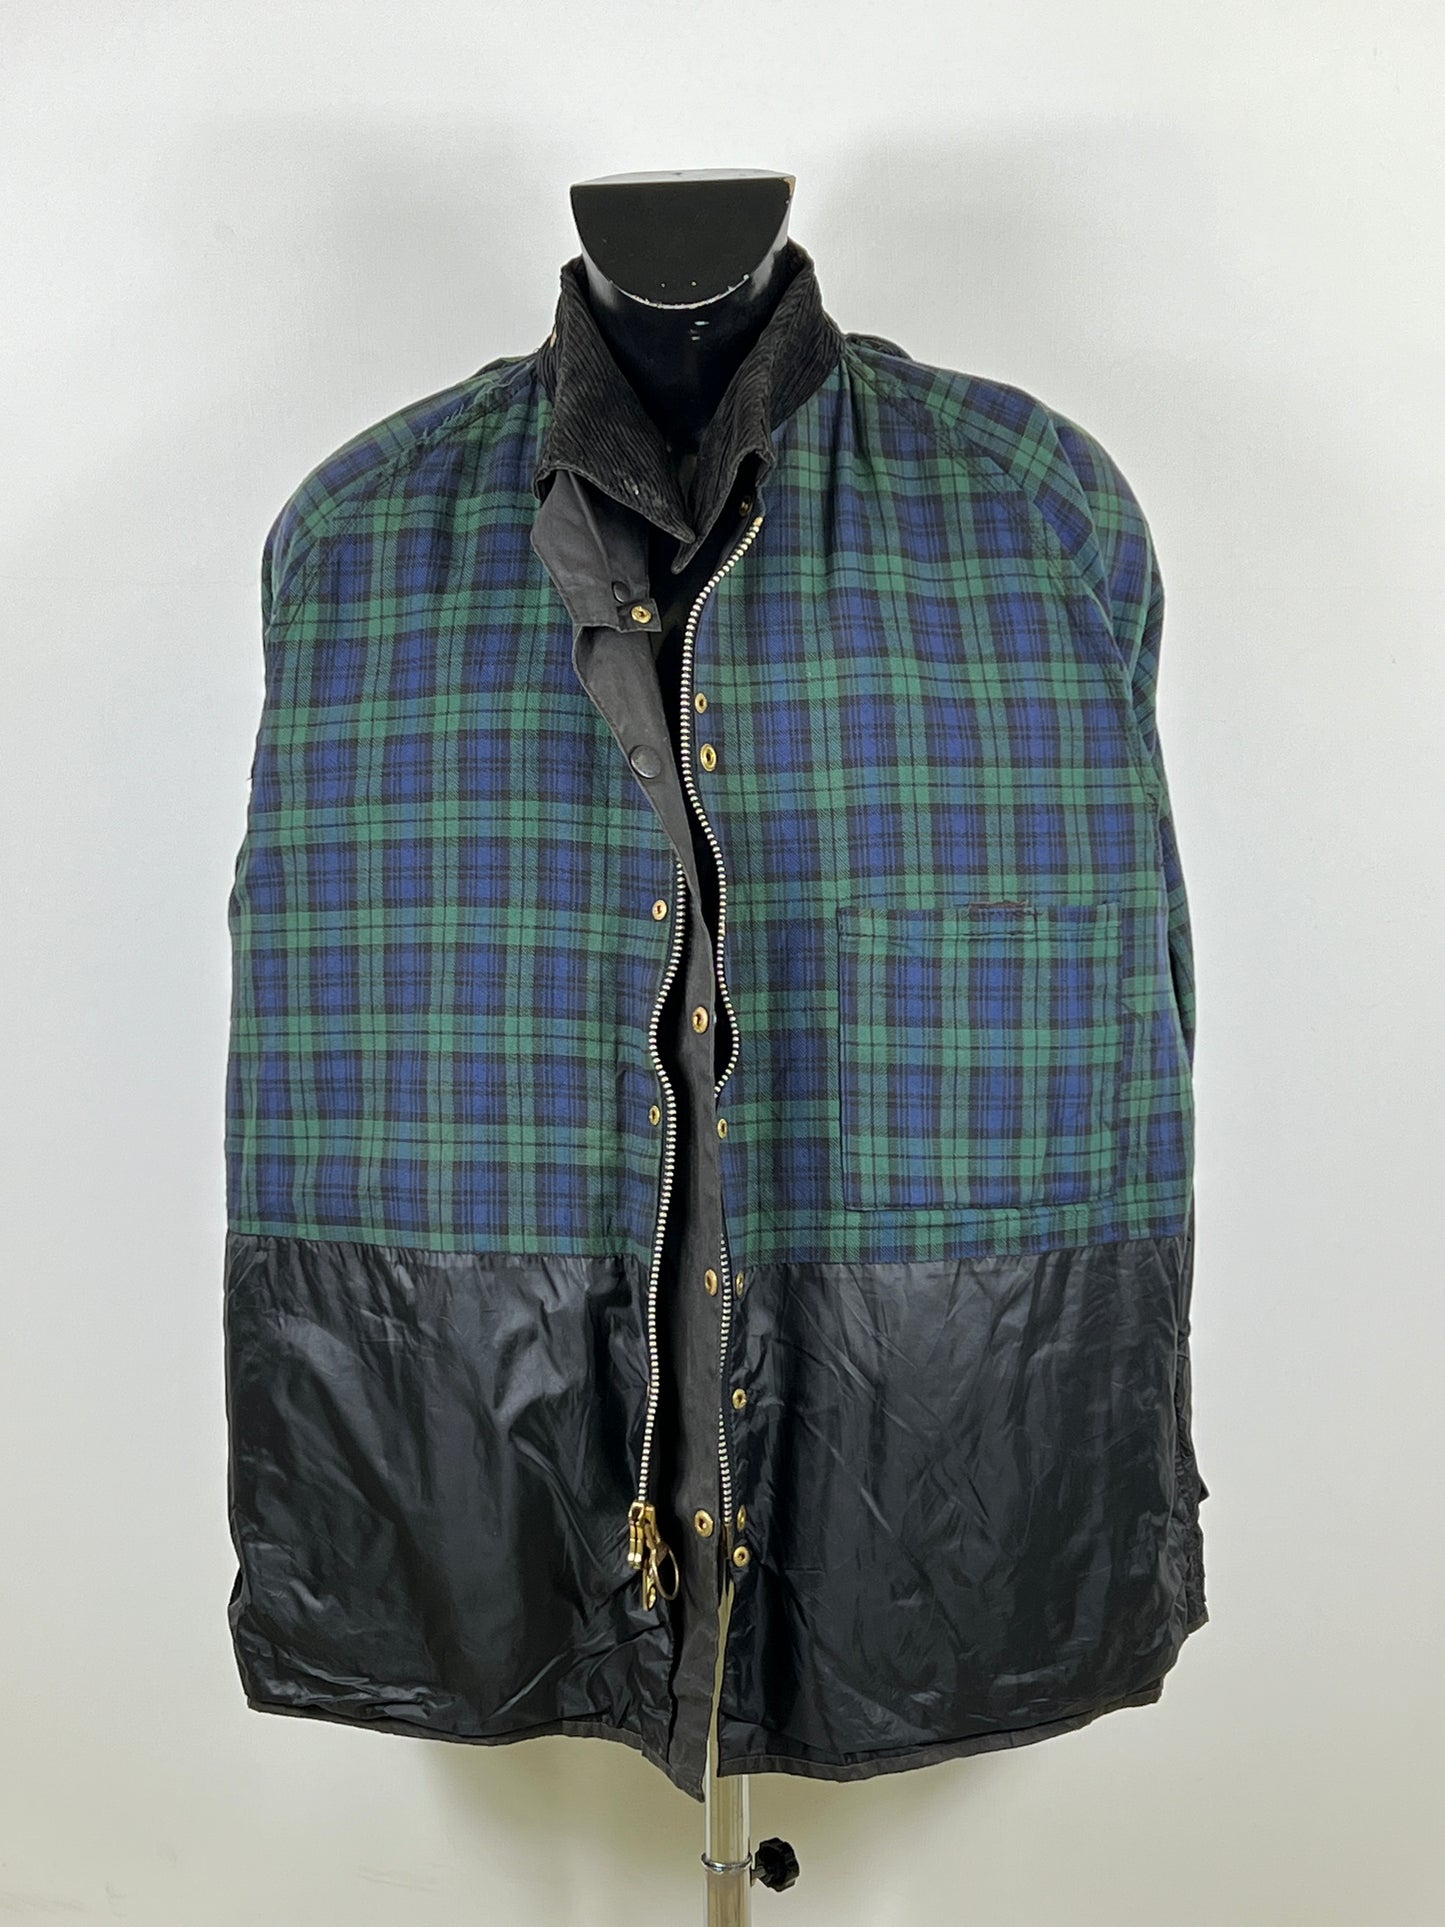 Barbour Giacca Bedale Uomo Nero Vintage C52/132 CM XXXL Black Waxed Bedale Jacket